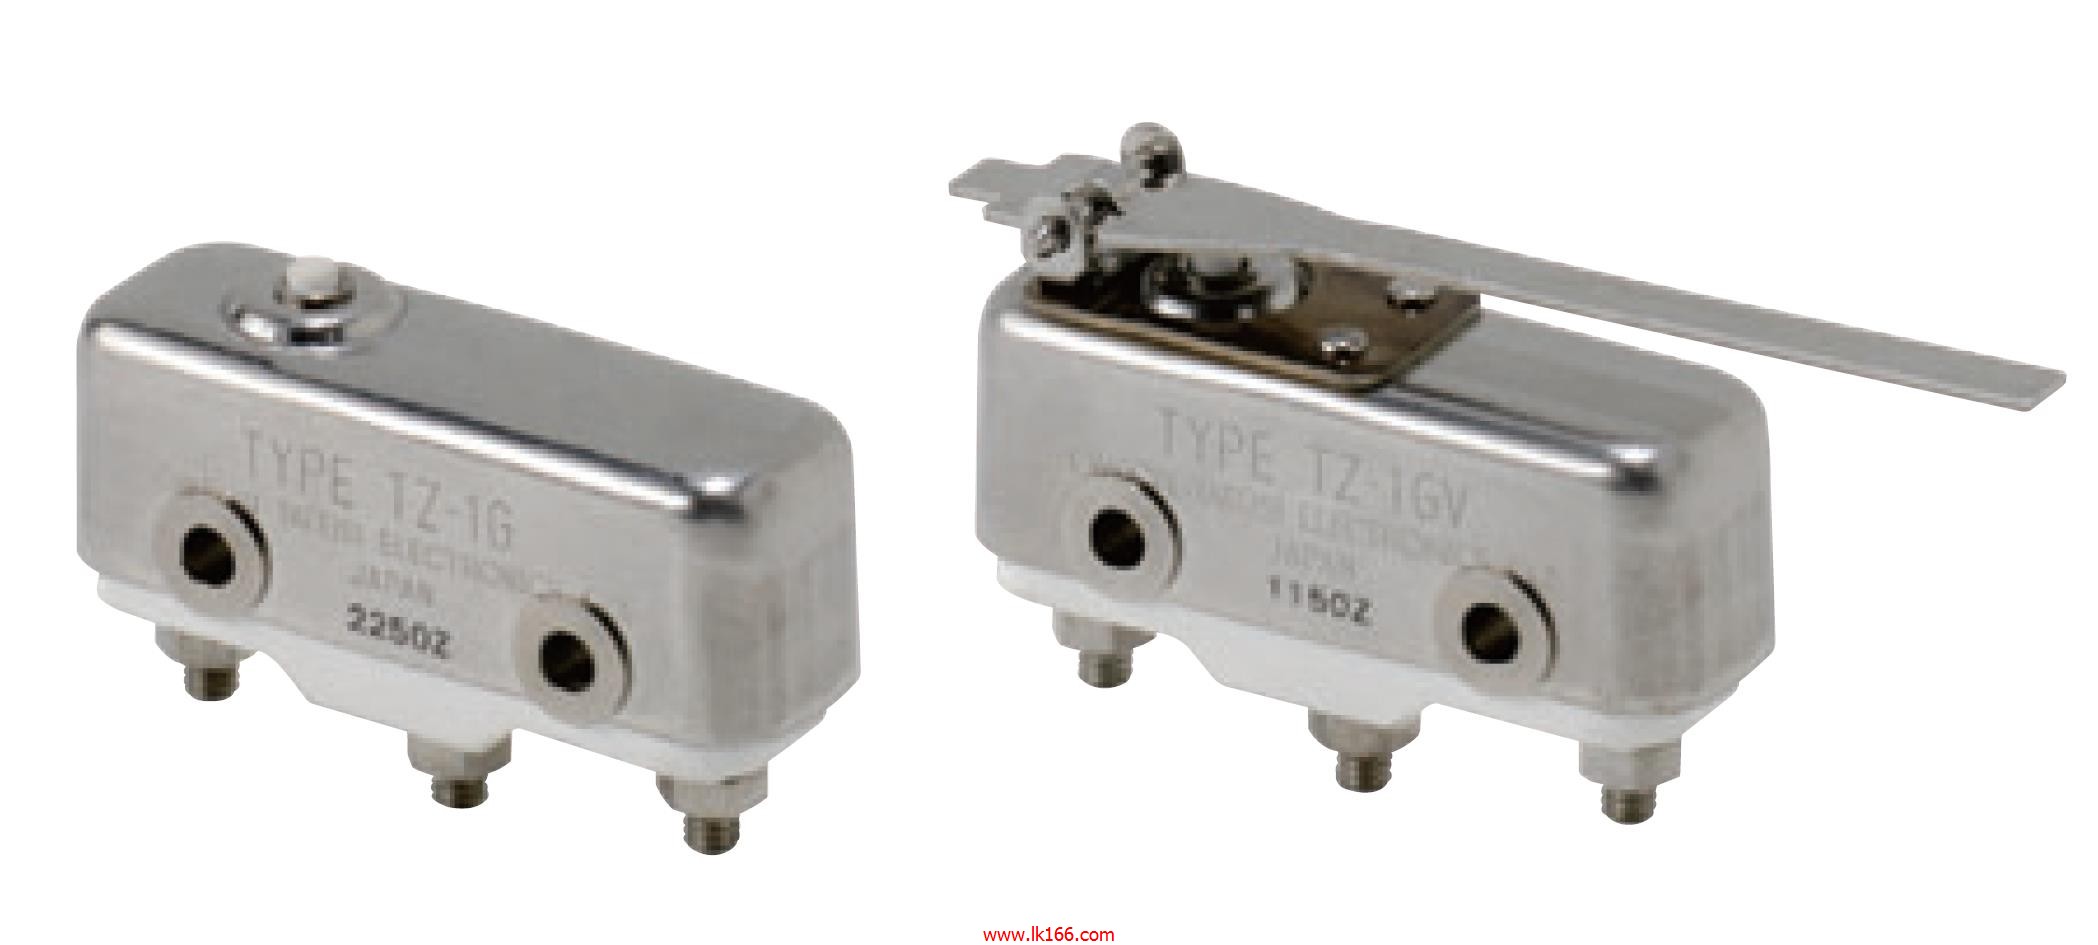 OMRON High-temperature Basic Switch TZ-1GV2